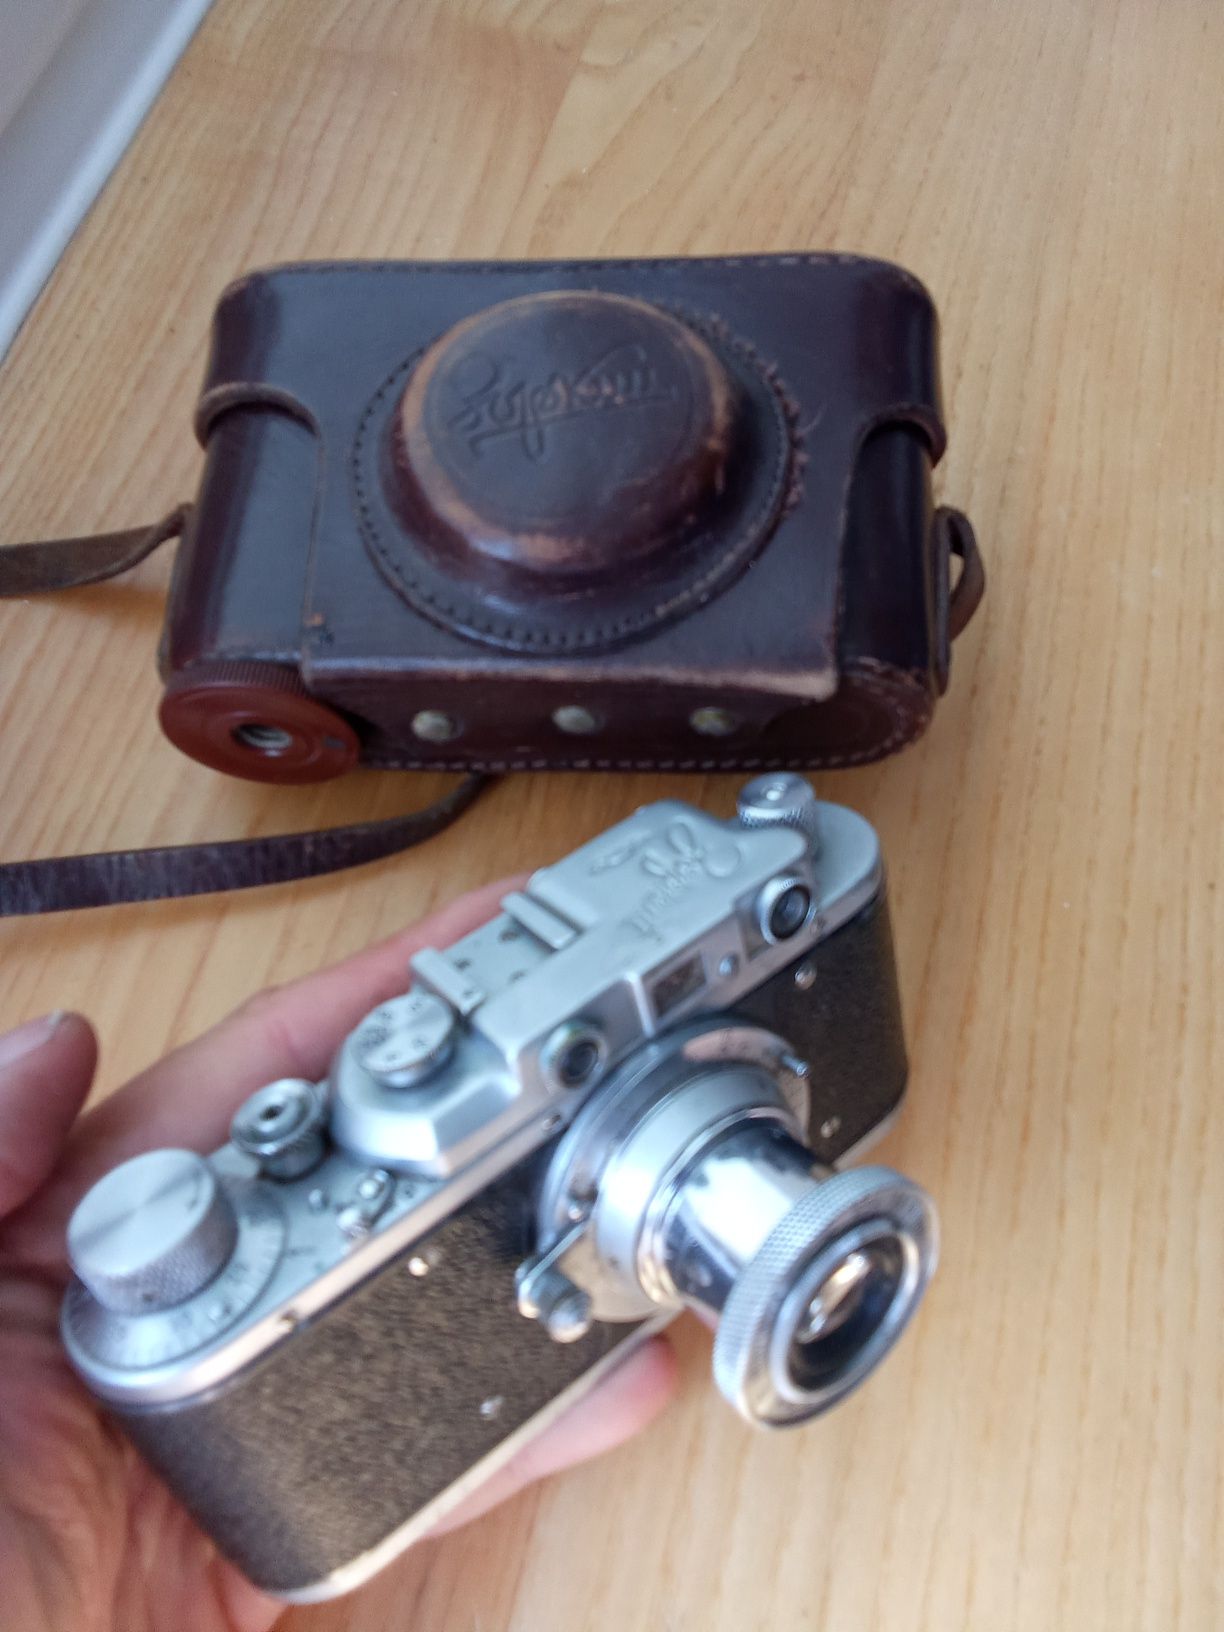 Kamera  zorkiy 1 Obiektyw undustar f3.5 50mm ZSRR

Kamera filmowa  Obi